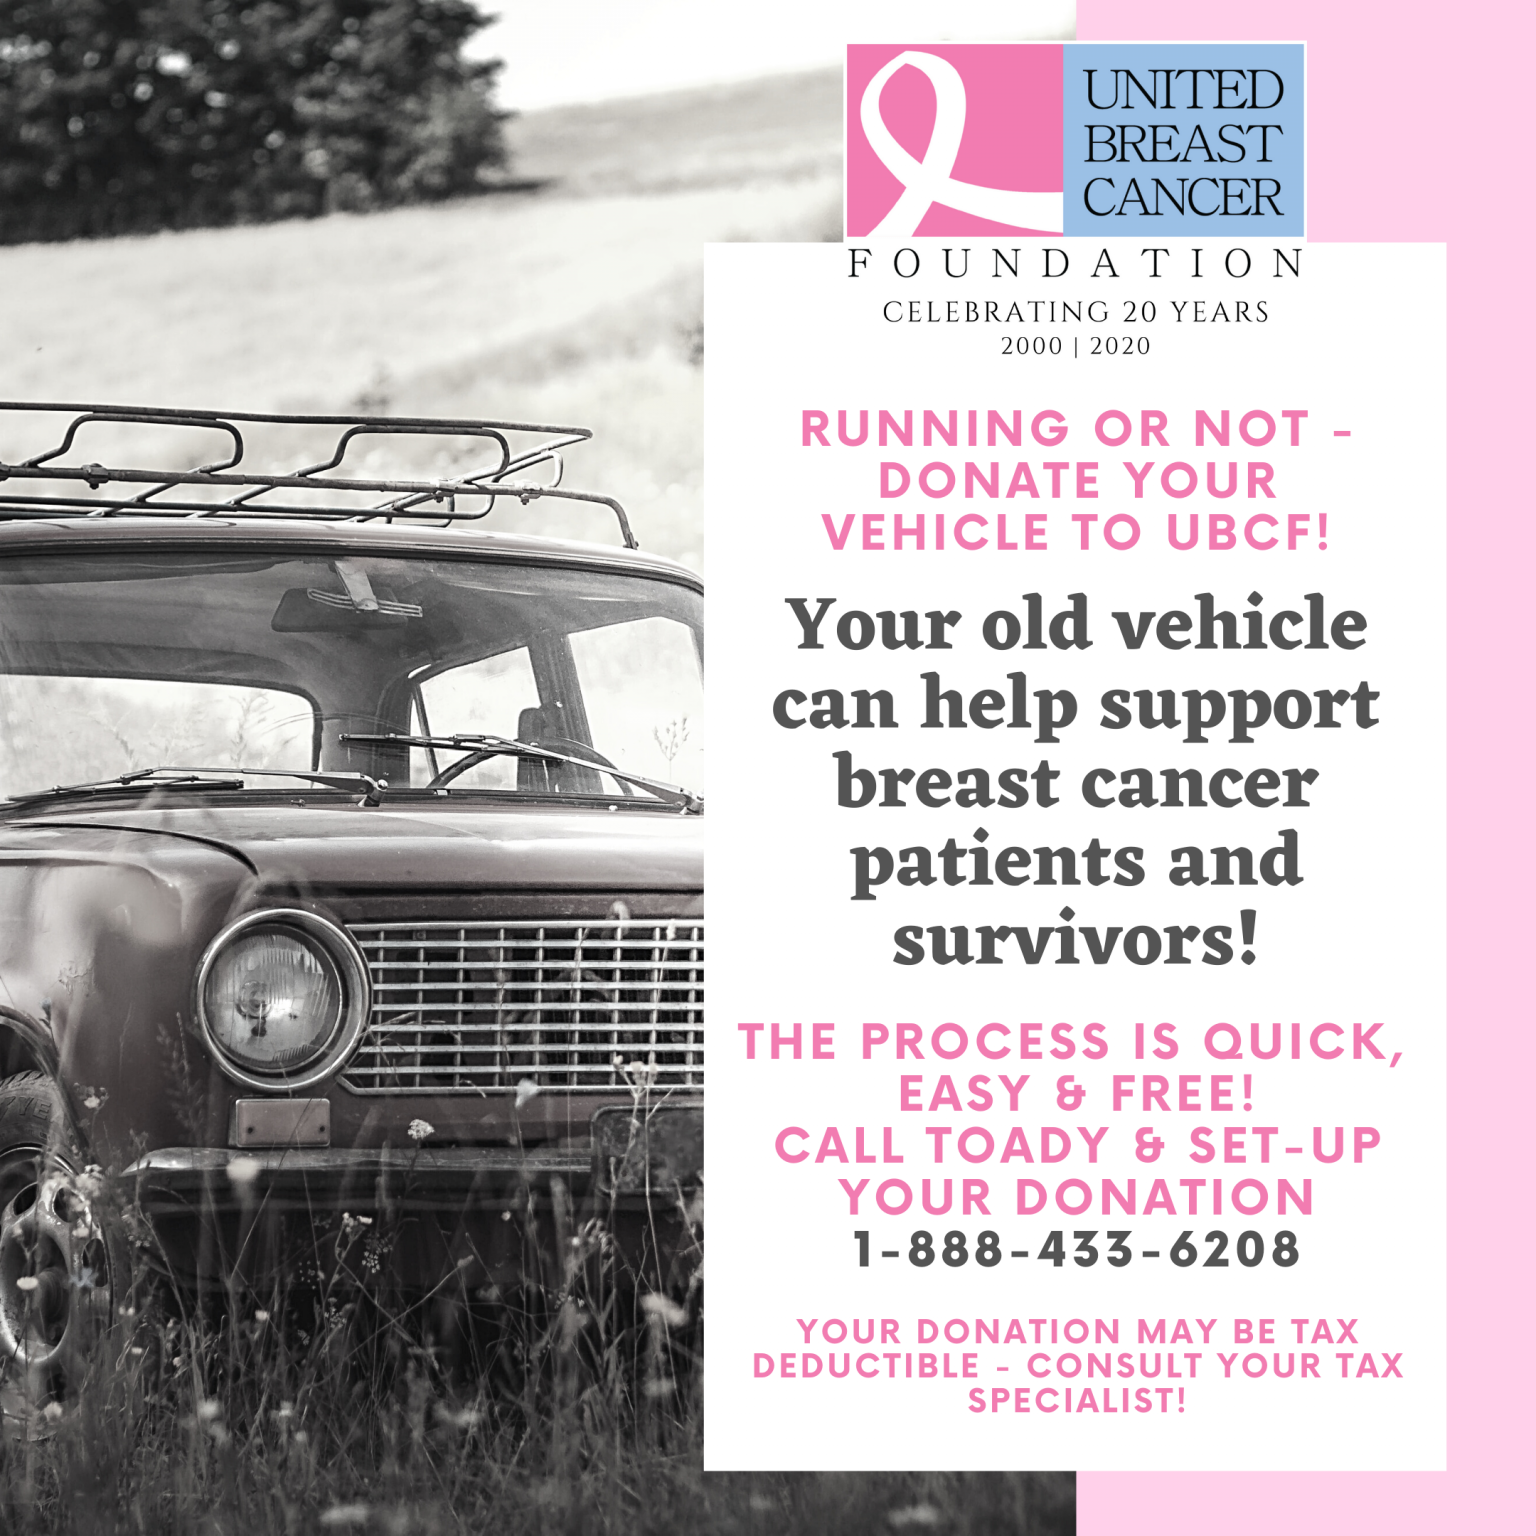 United Breast Cancer Foundation Hosting Car Donation Drive